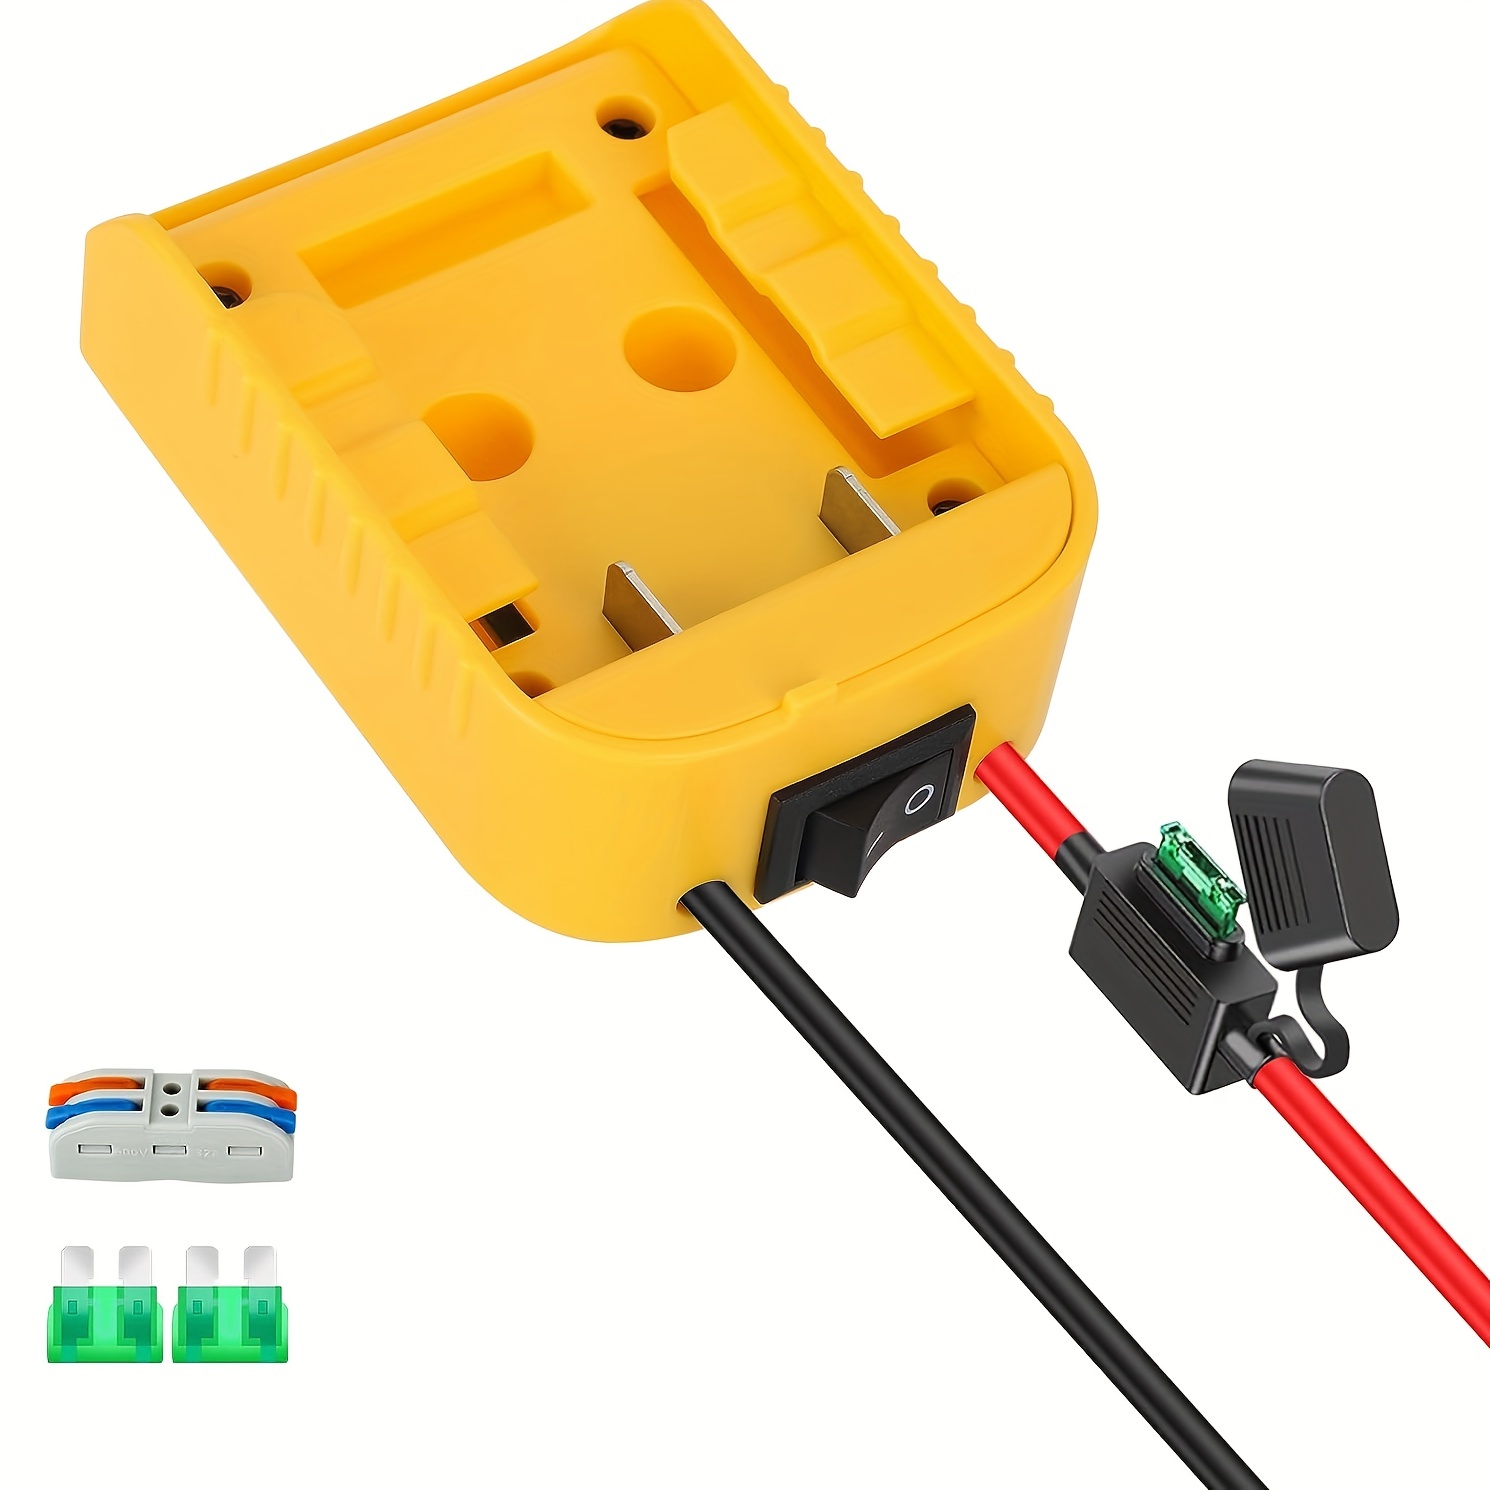 Black & Decker 20V Battery Adapter Holder dock mount w/ Wires for